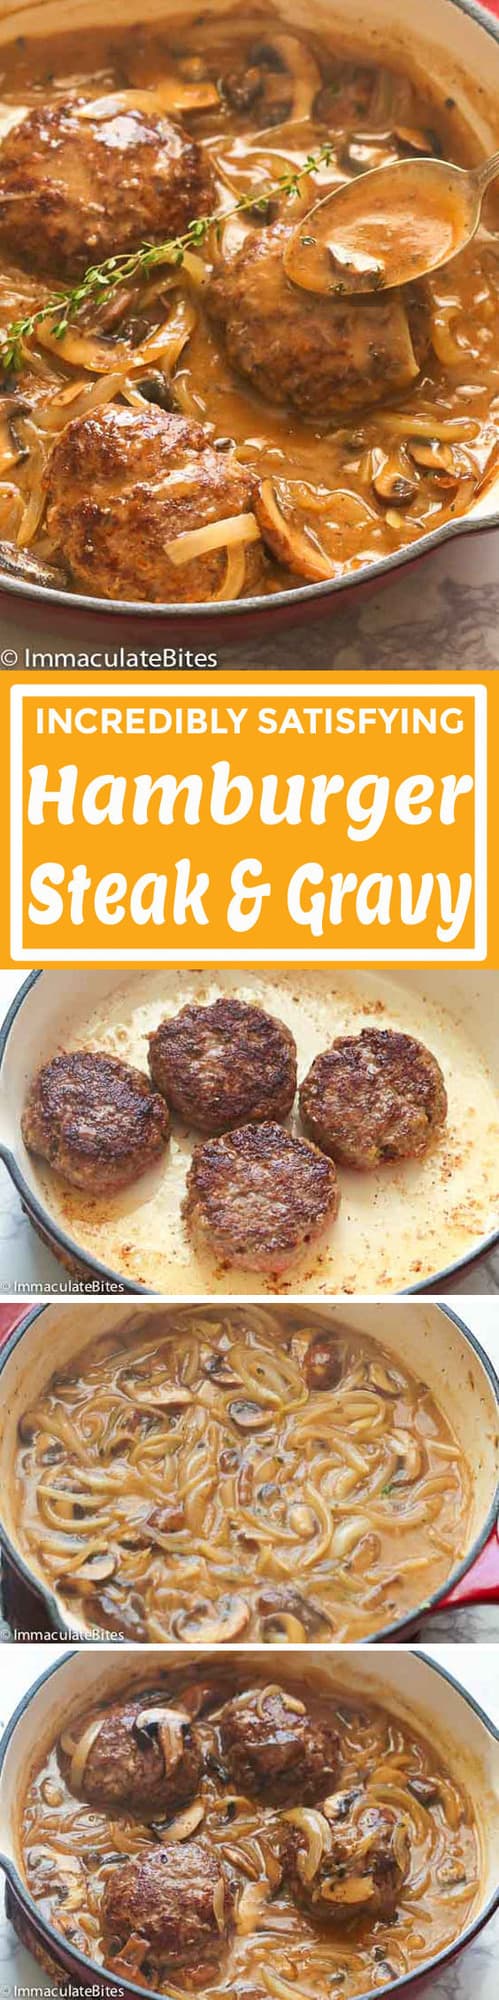 Hamburger Steak and Gravy